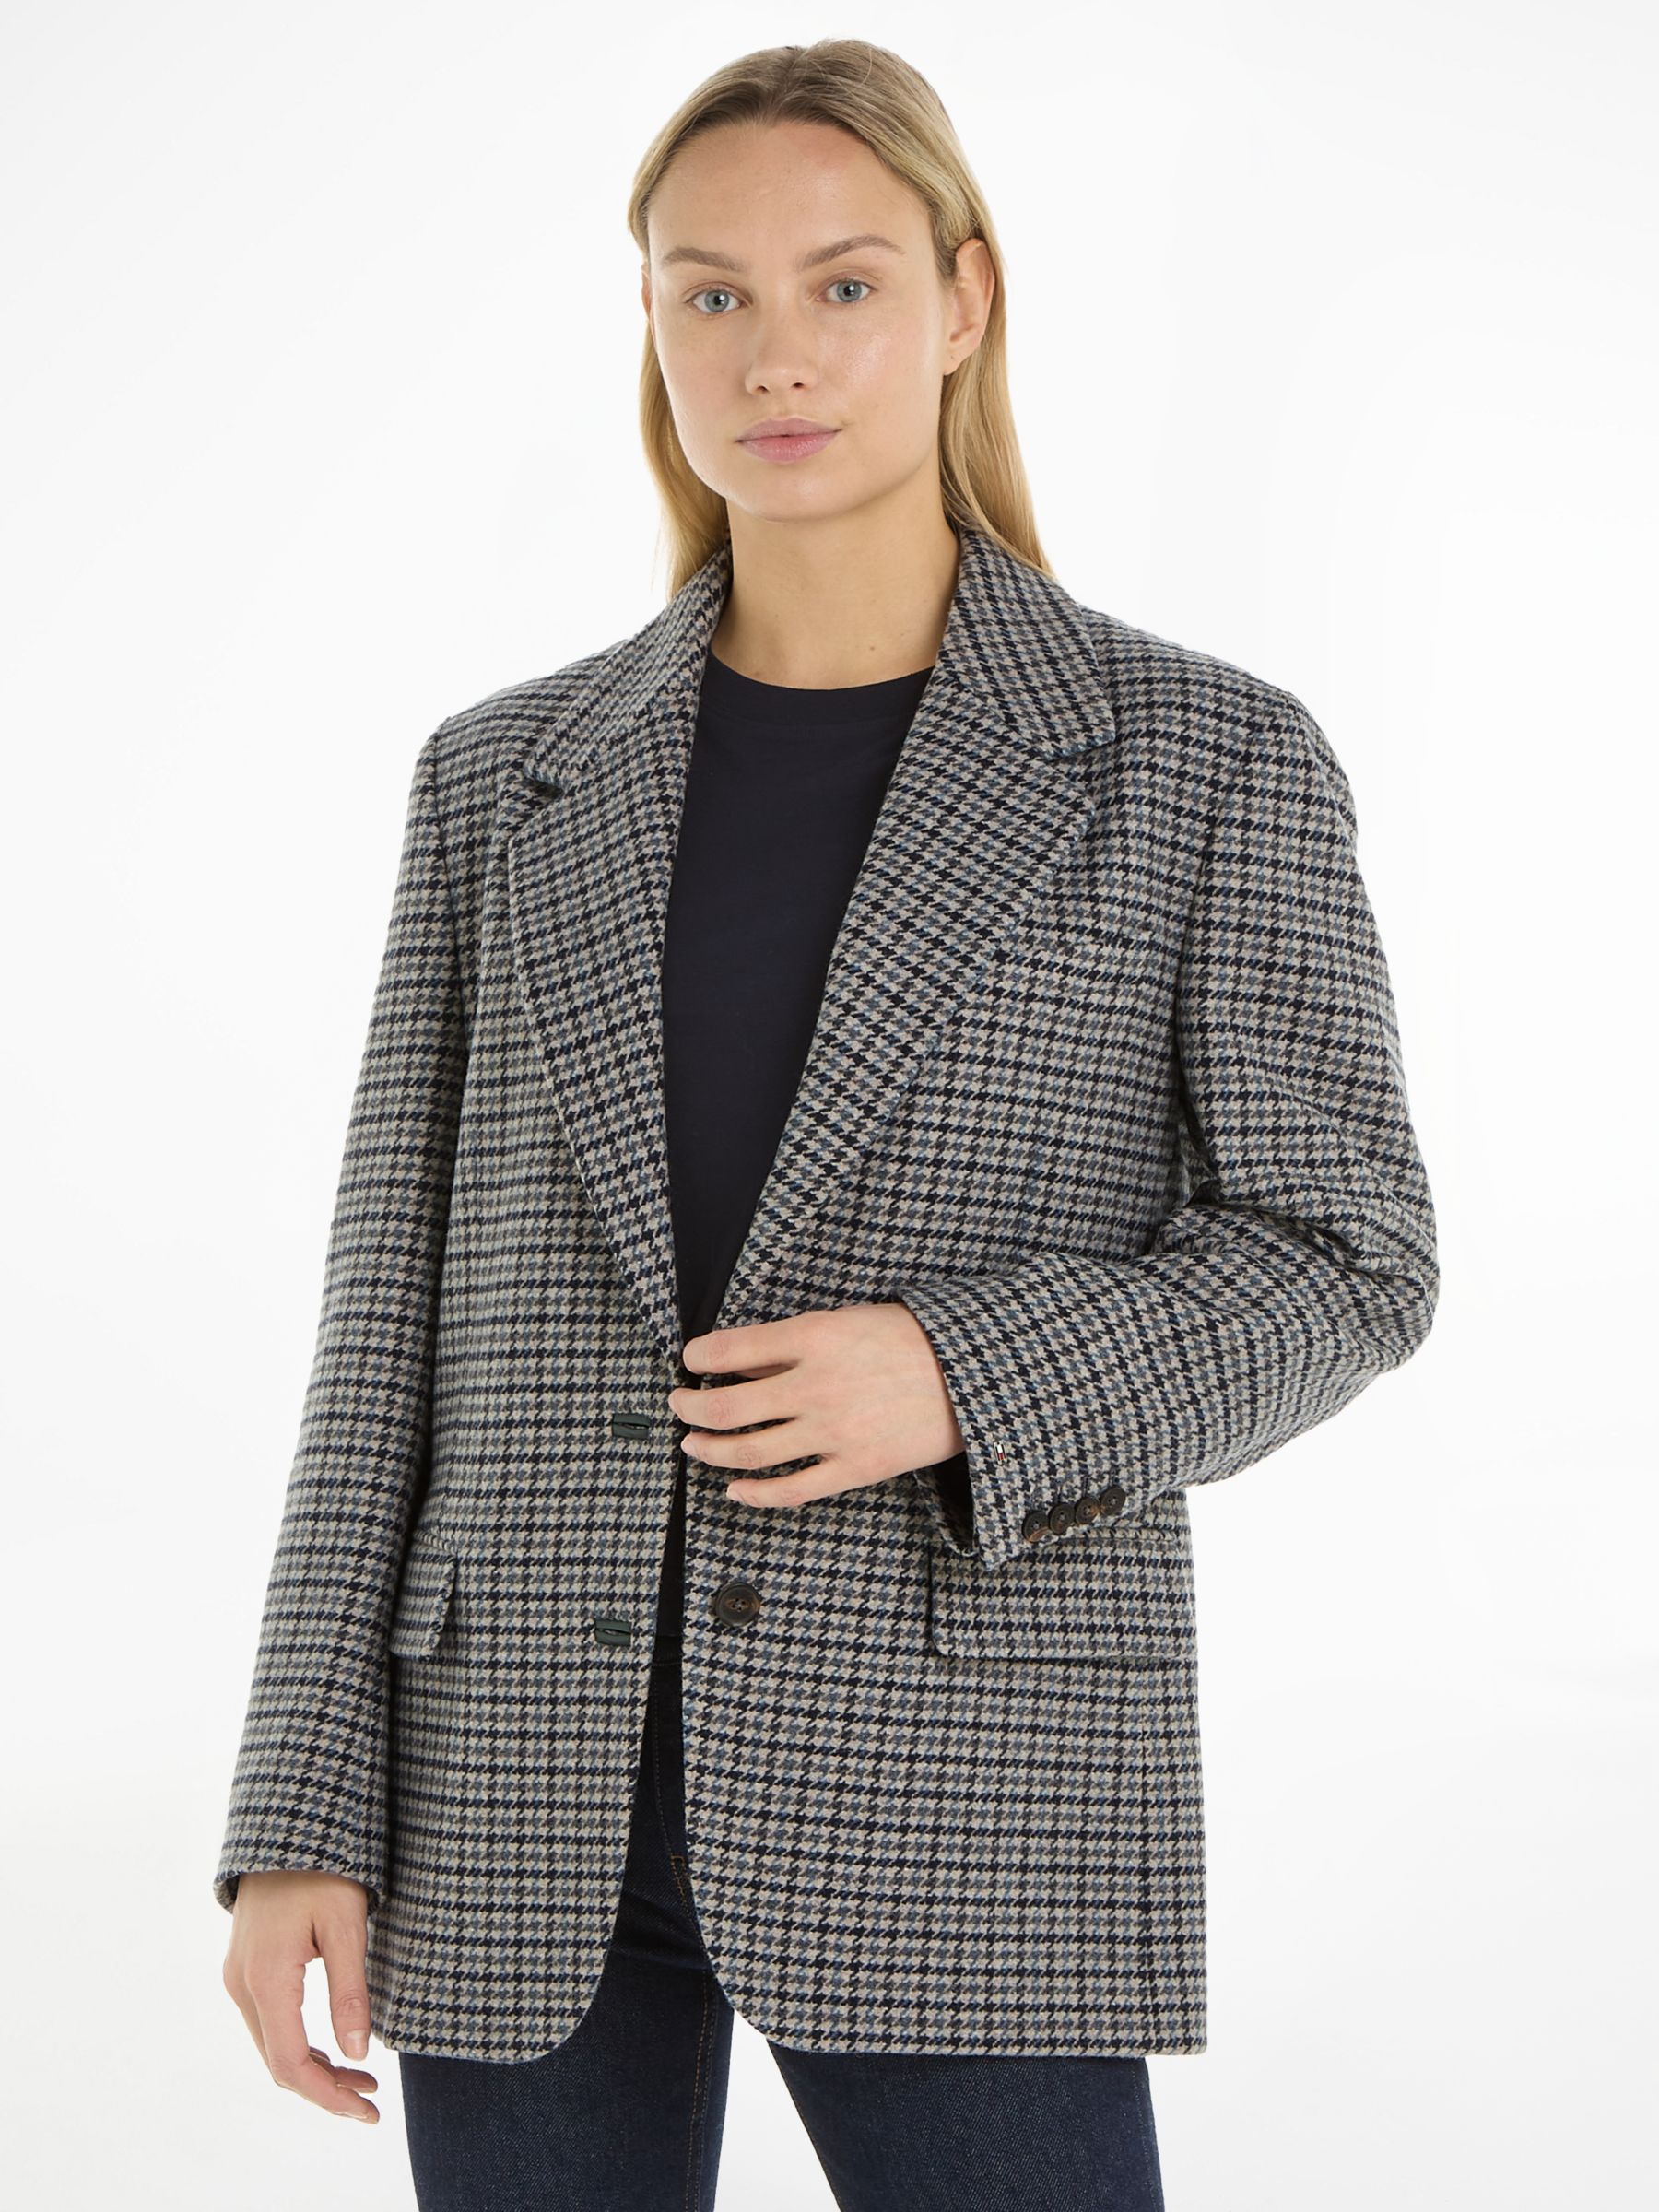 slids butiksindehaveren Flere Women's Coats & Jackets - Tommy Hilfiger, Blazers | John Lewis & Partners